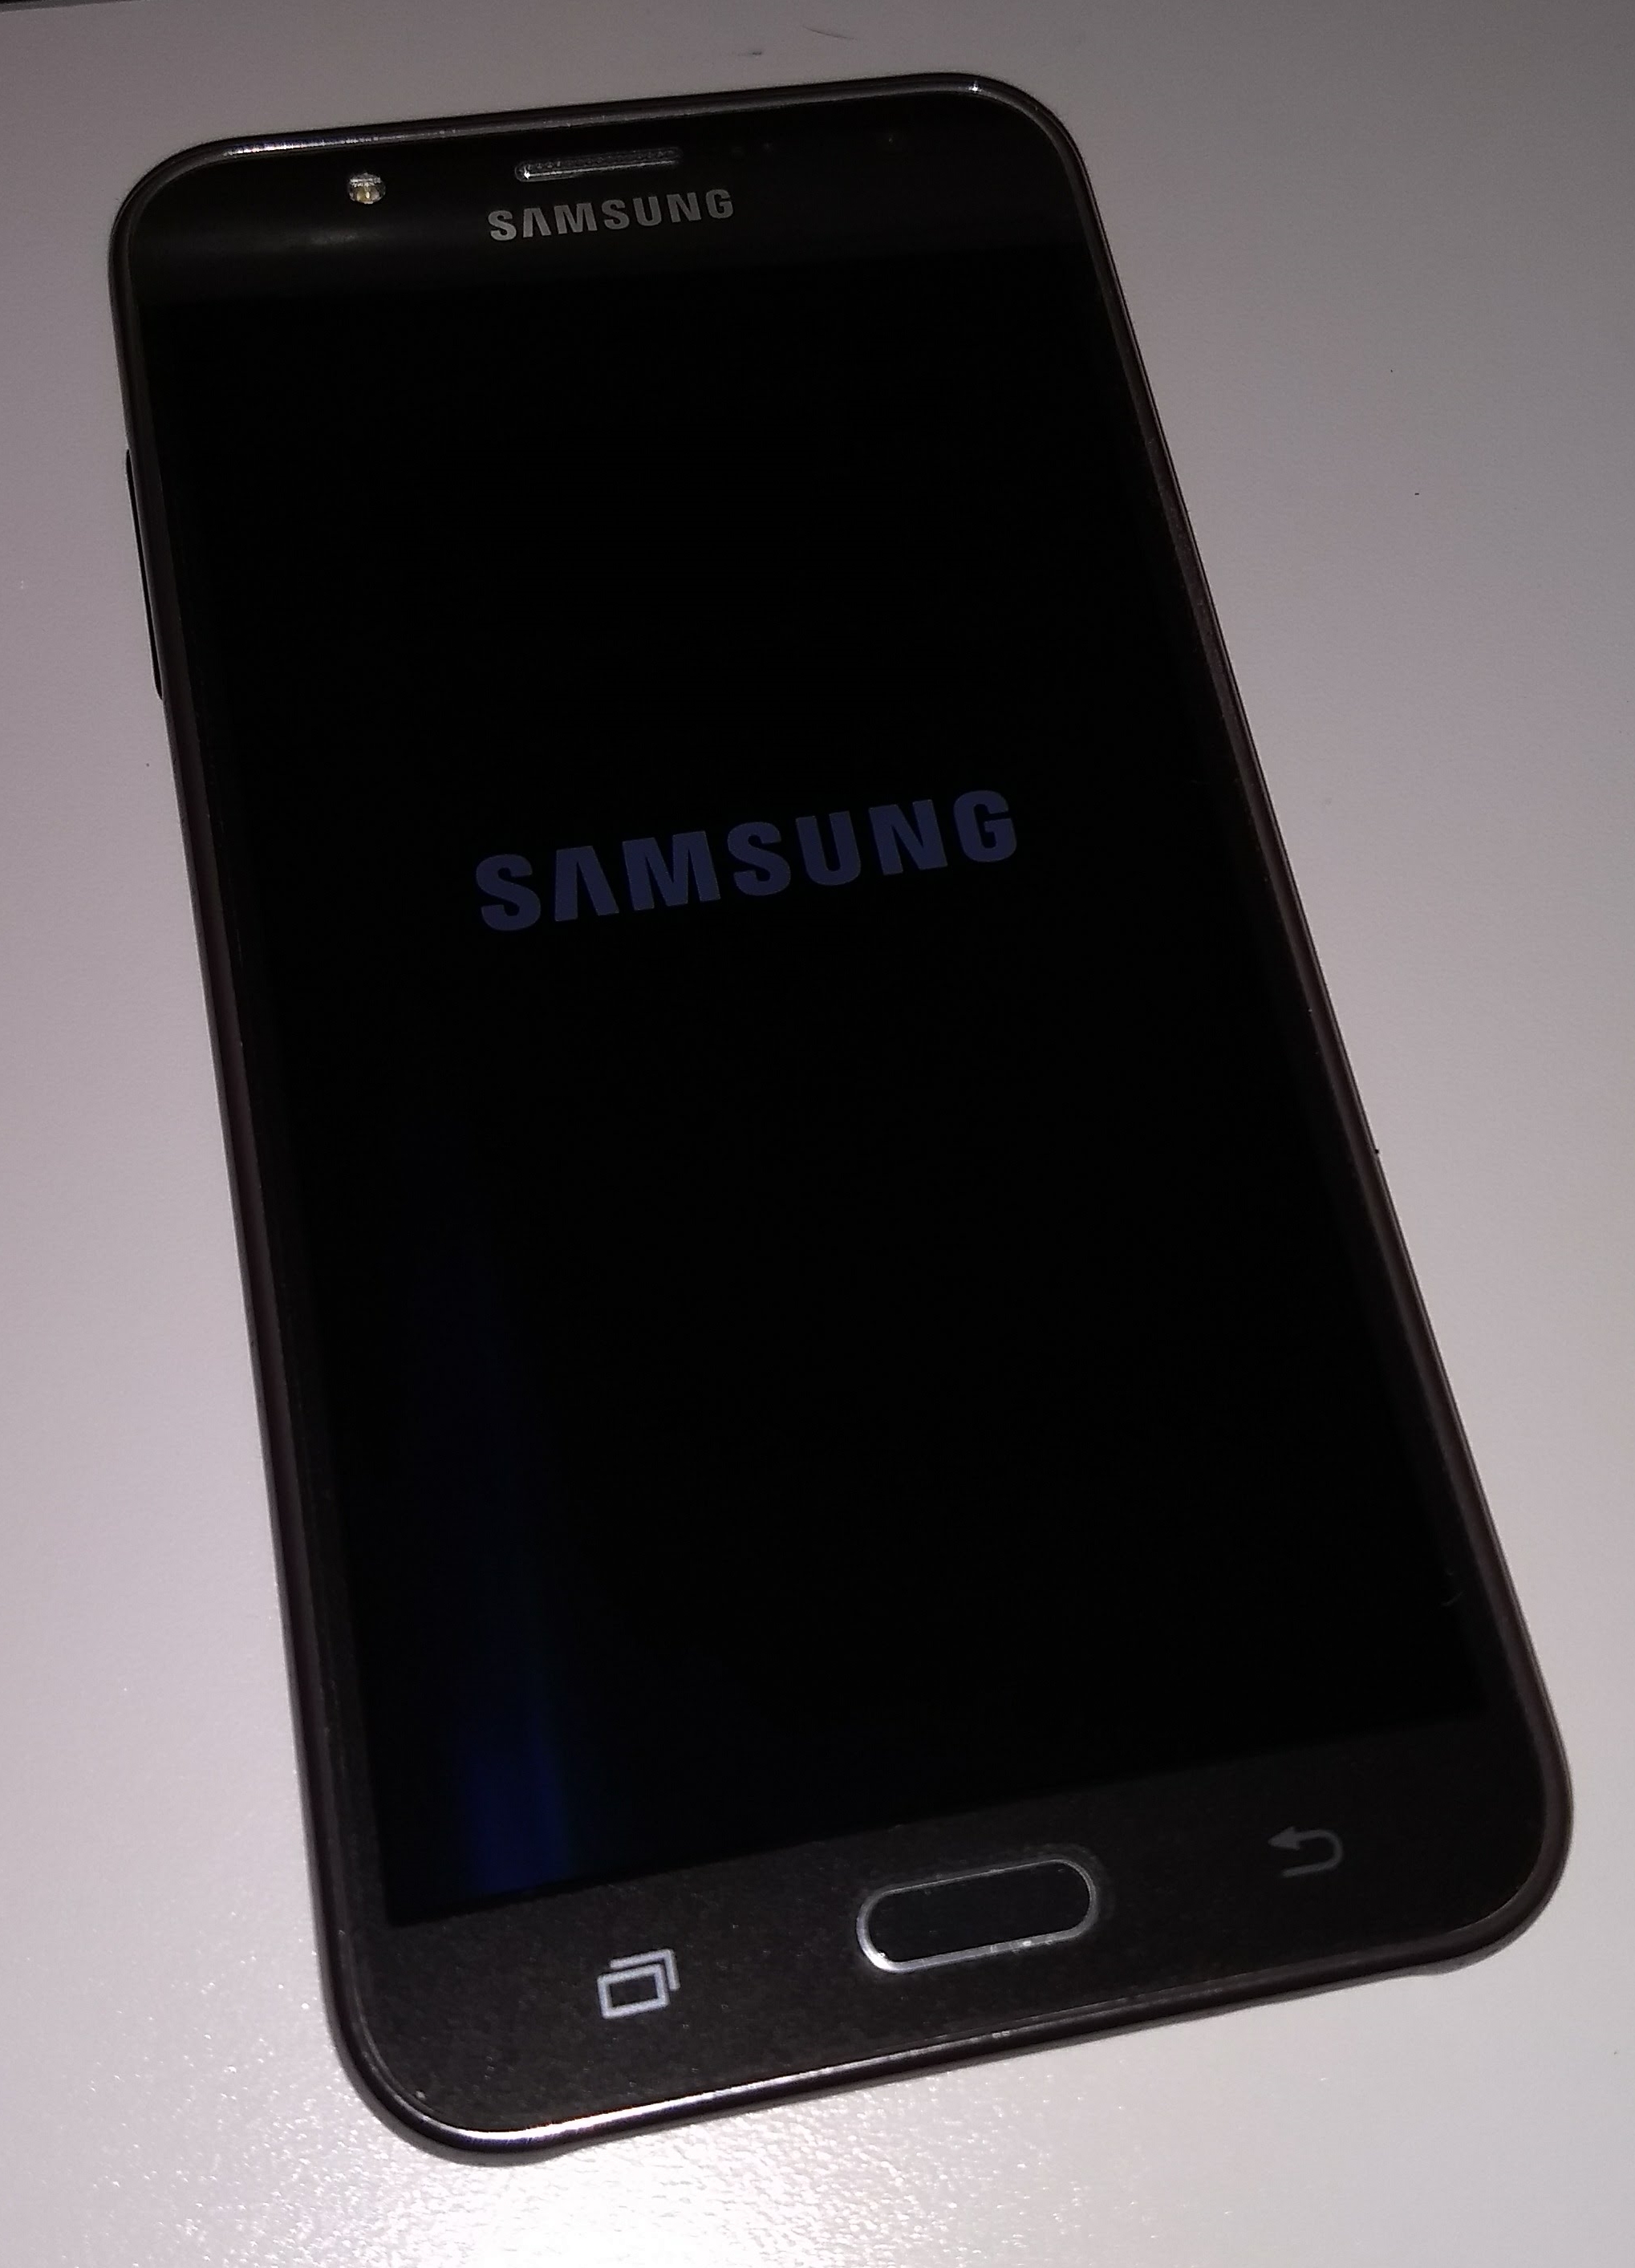 File:Samsung Galaxy J7 SM-J700M (2).jpg - Wikimedia Commons